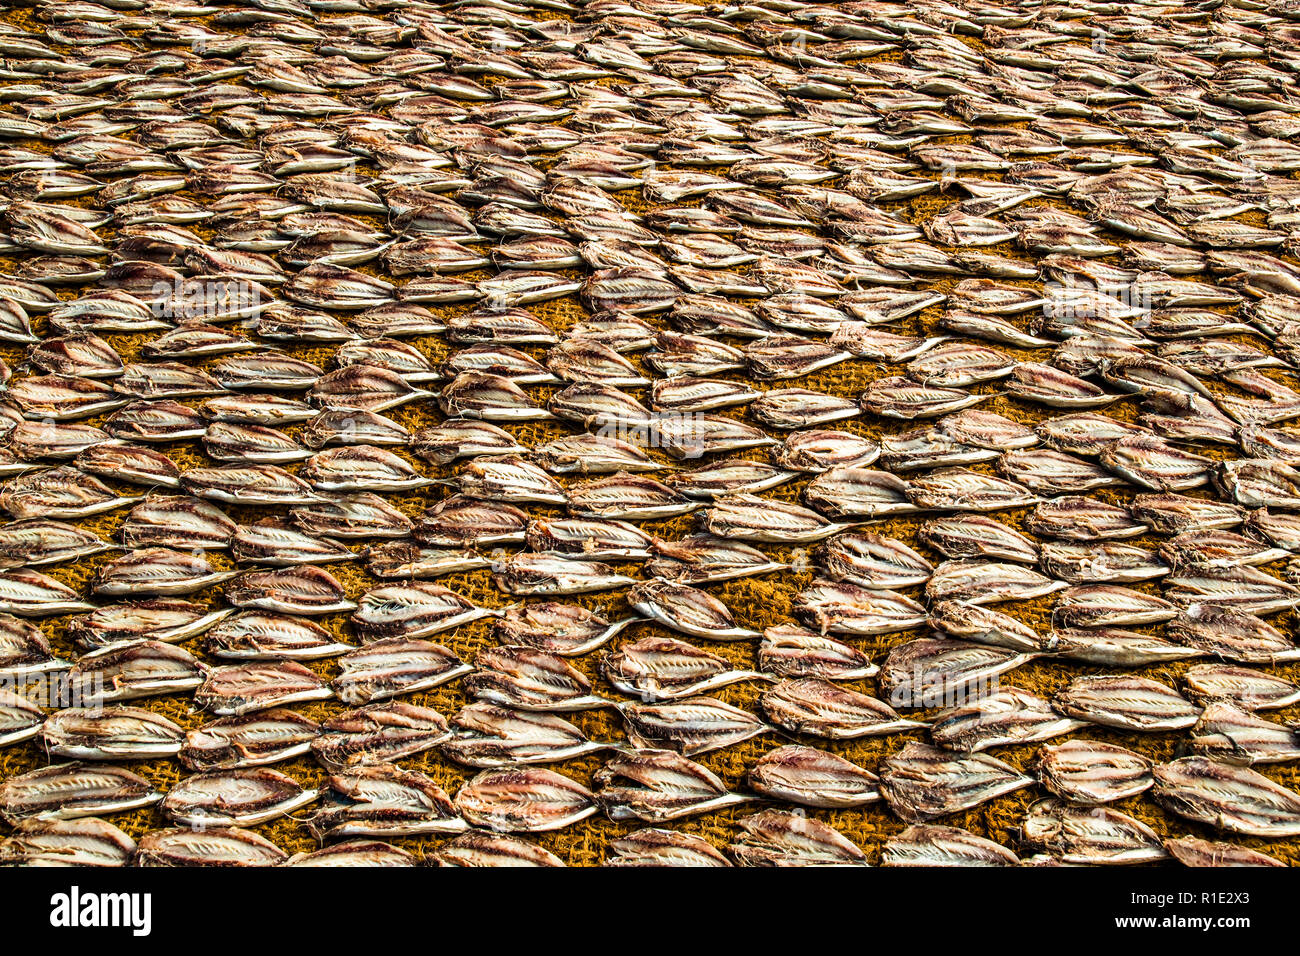 Fishing and salted fish production hot spot of Sri Lanka Stock Photo